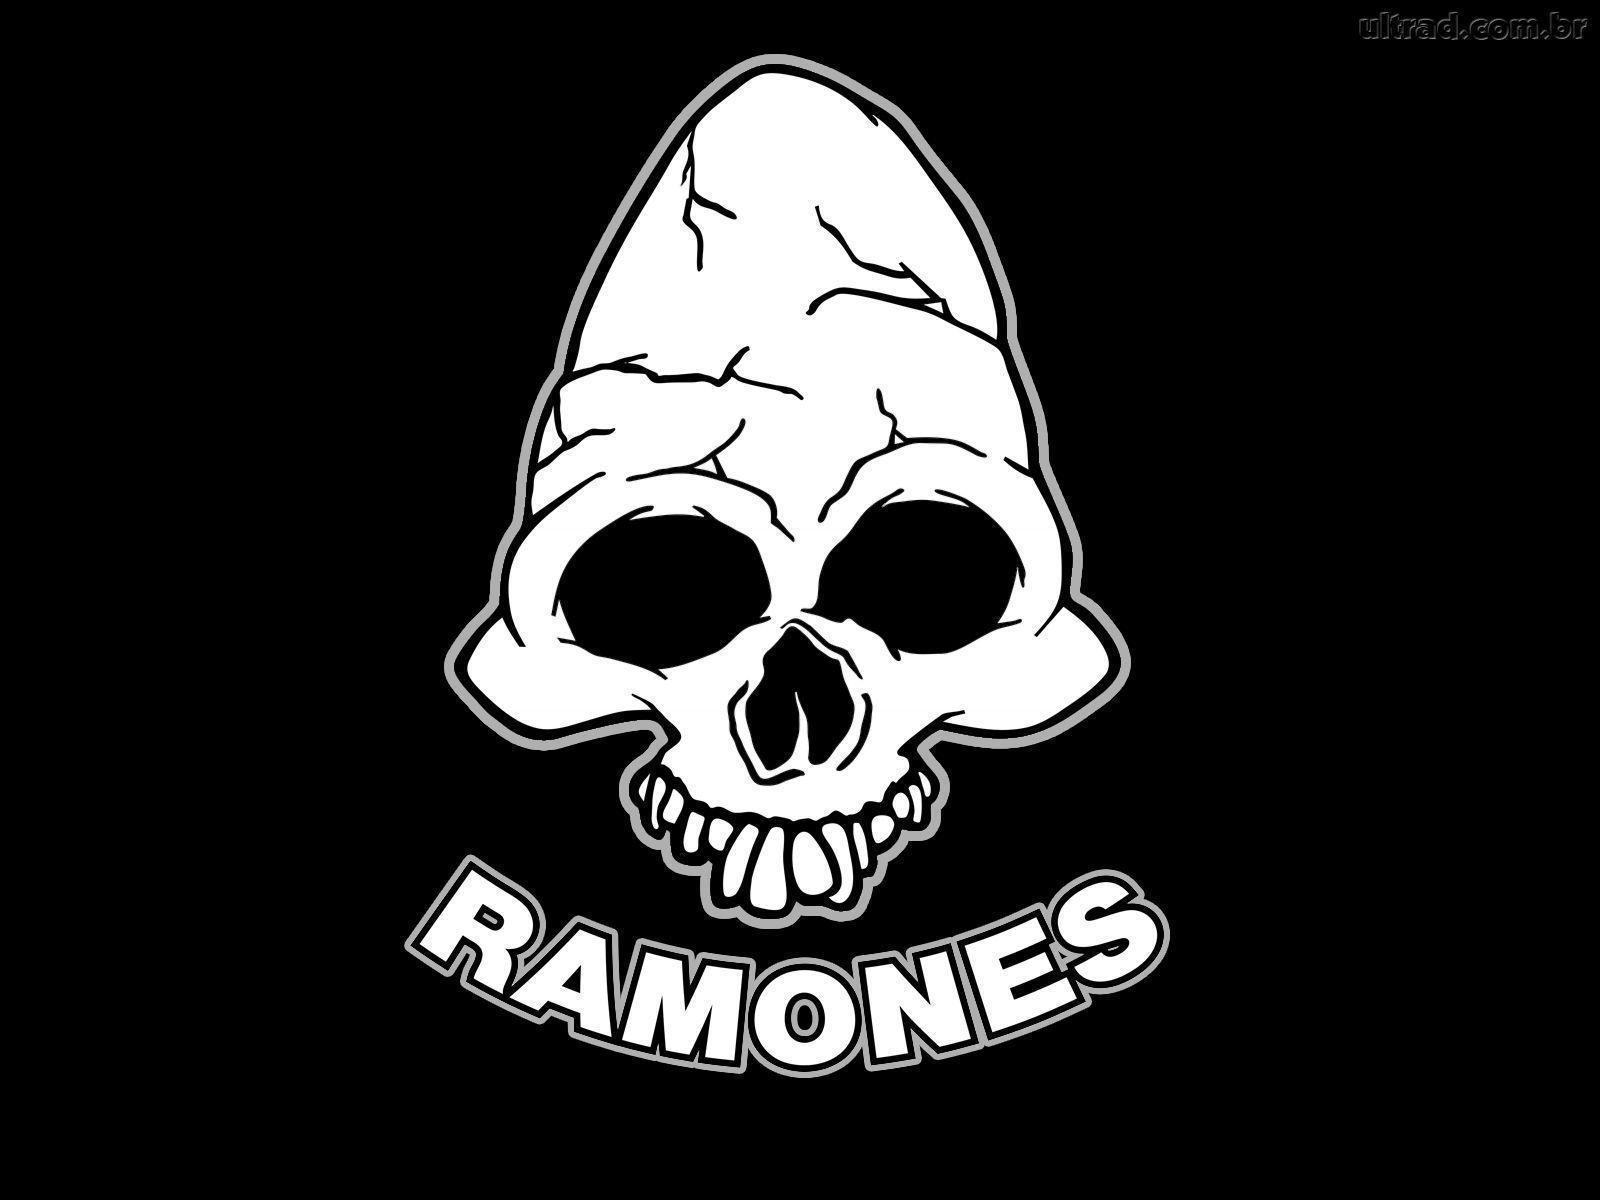 Ramones wallpaperéis de Parede